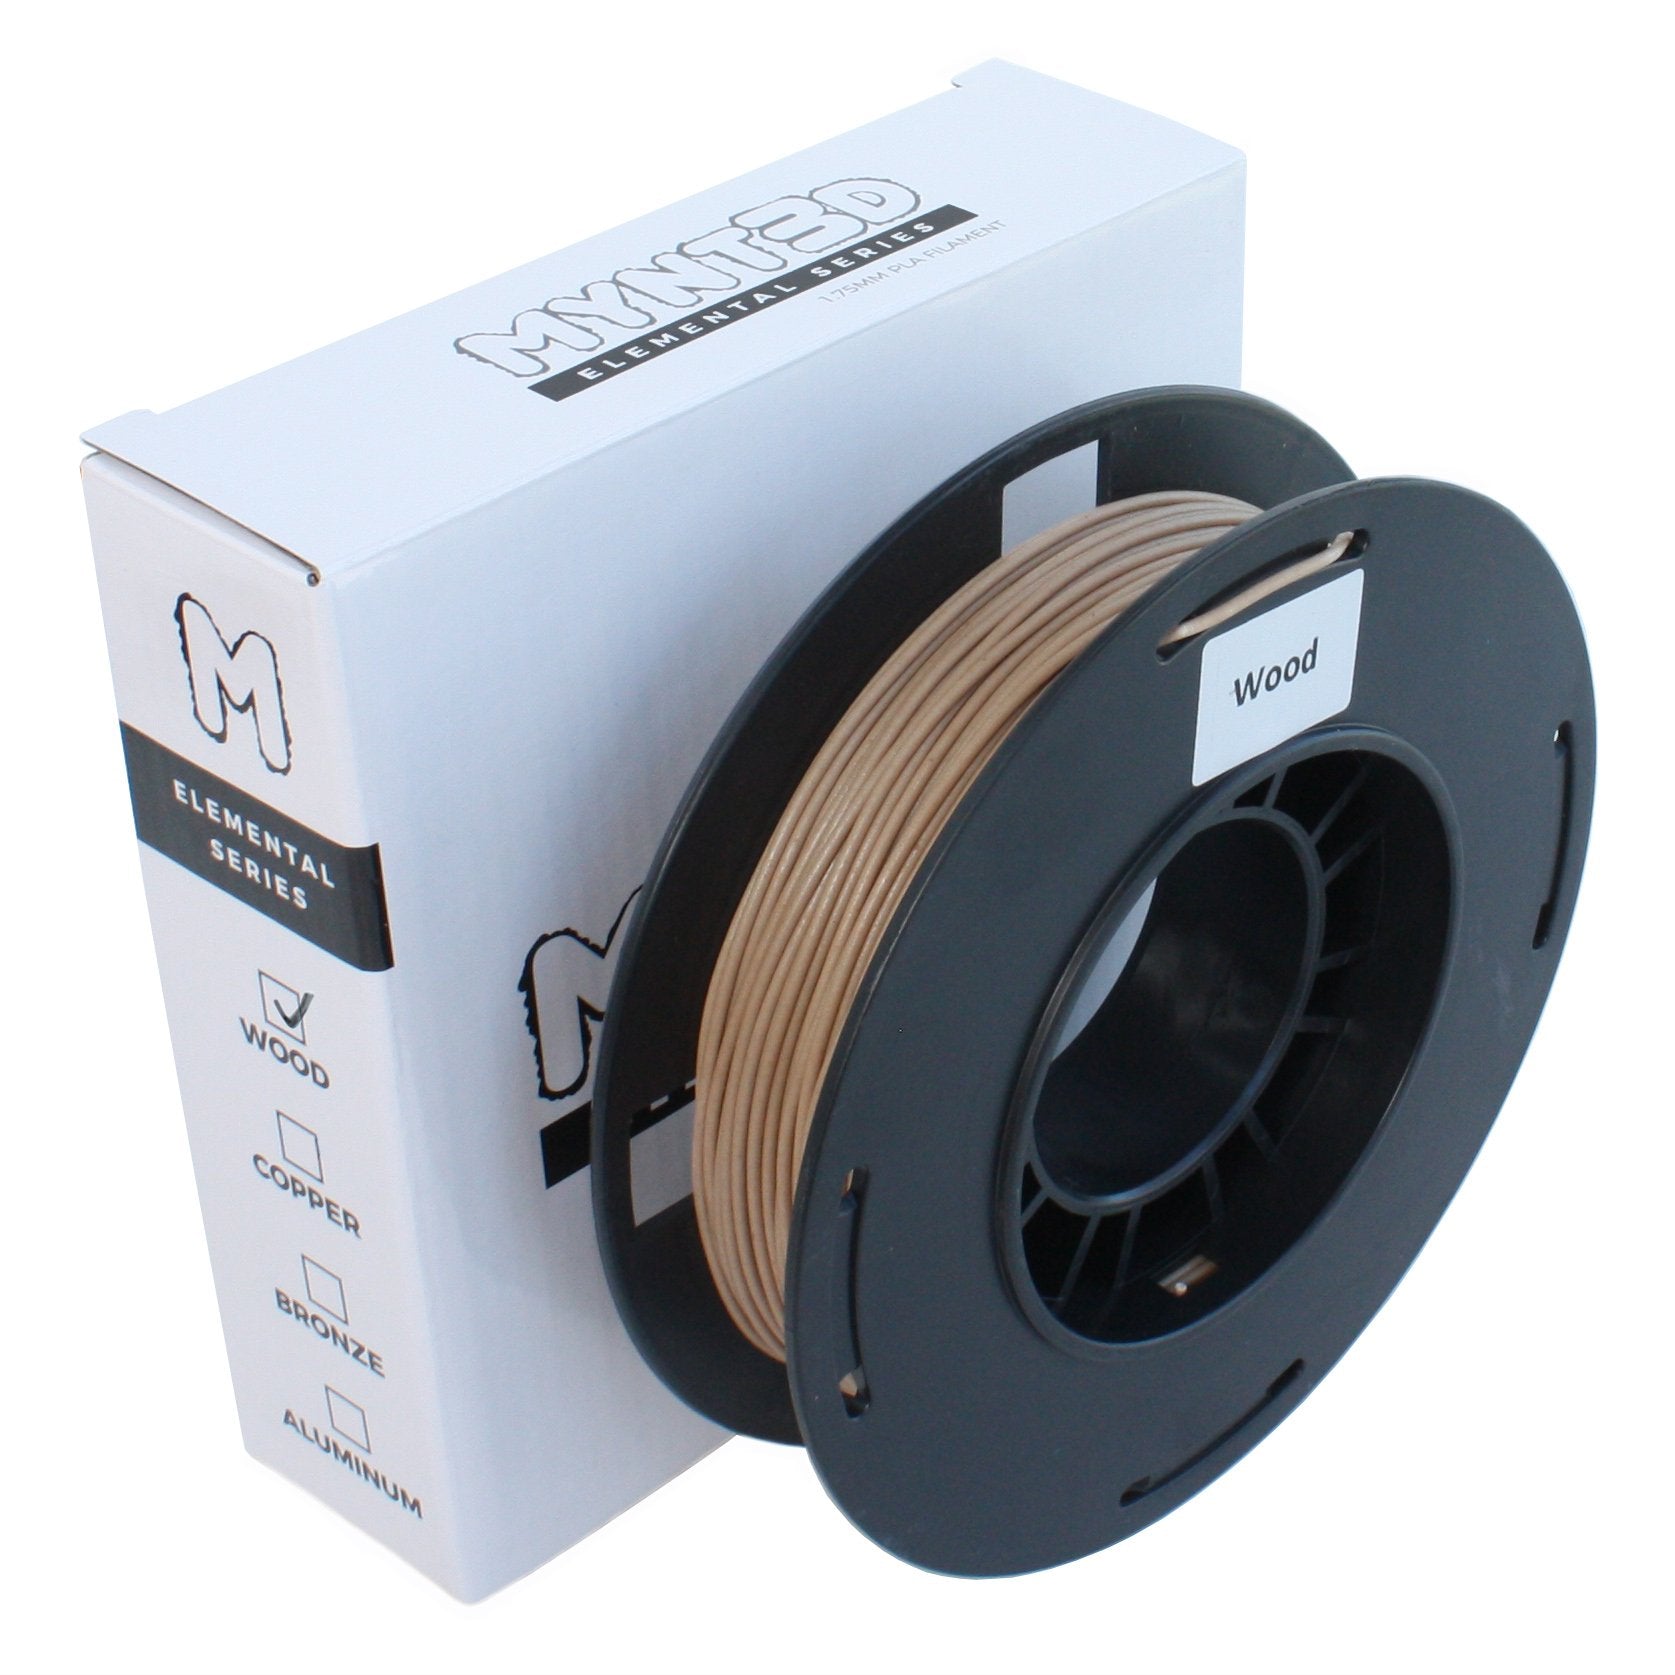 200g Wood PLA Filament Spool